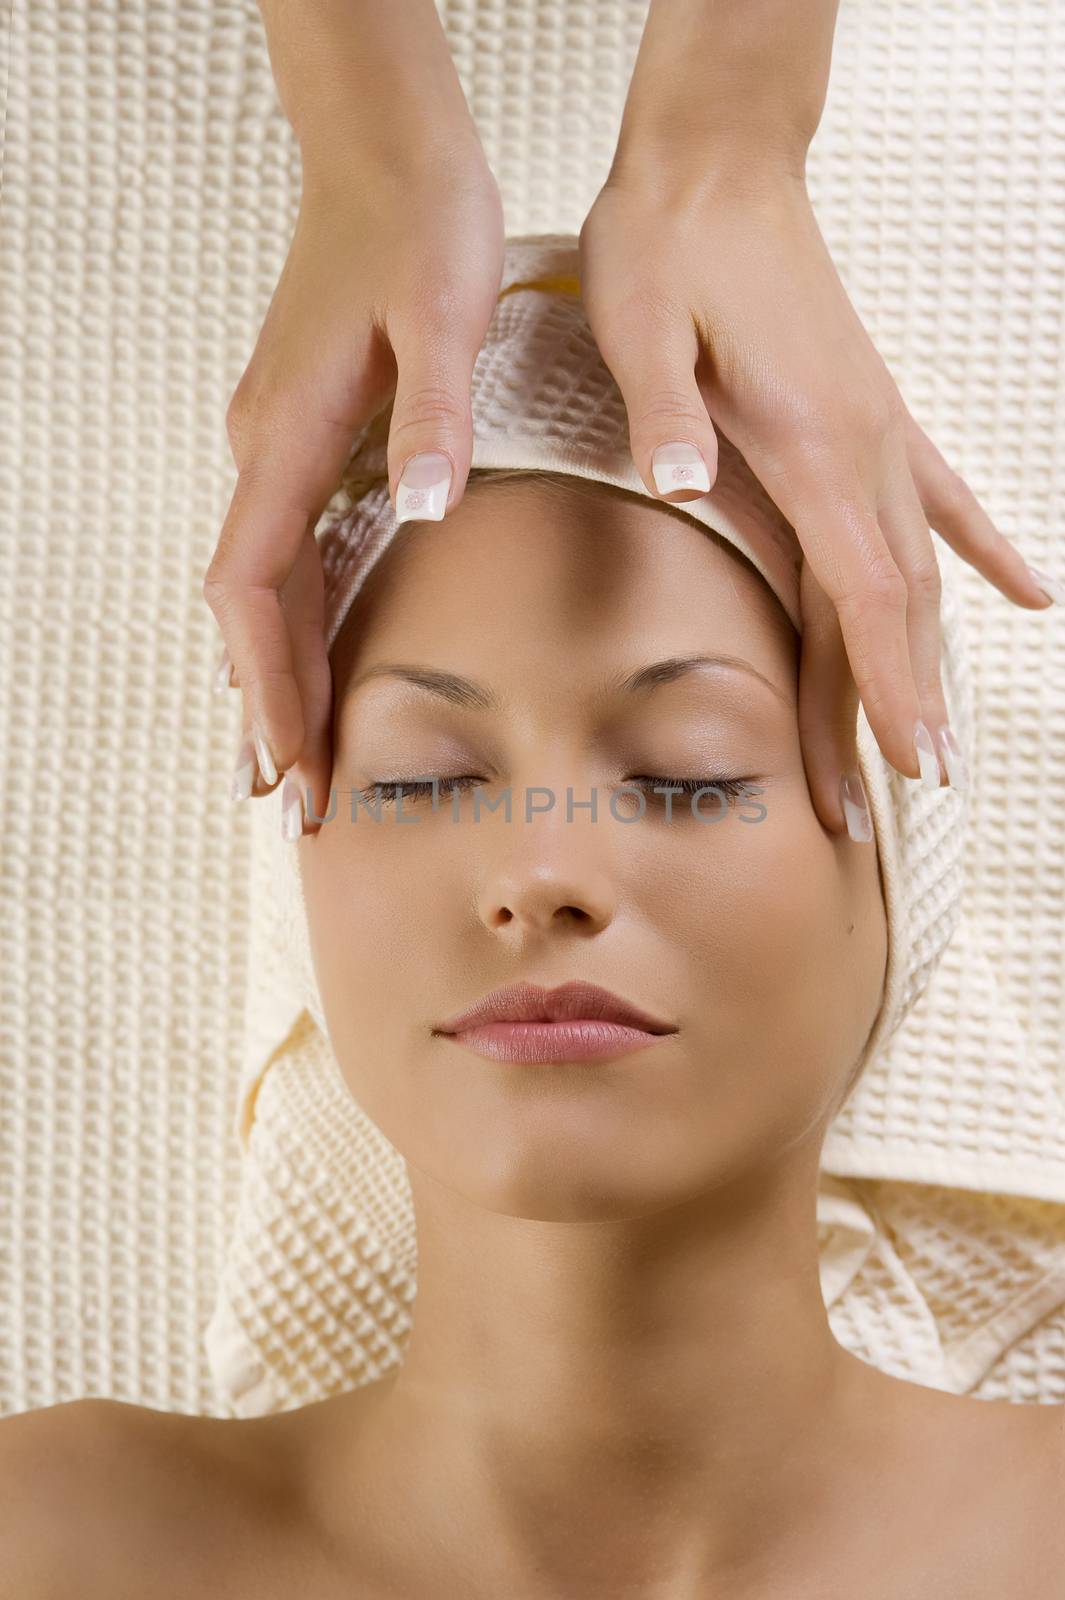 cute woman in a spa getting an hands massage for the headache